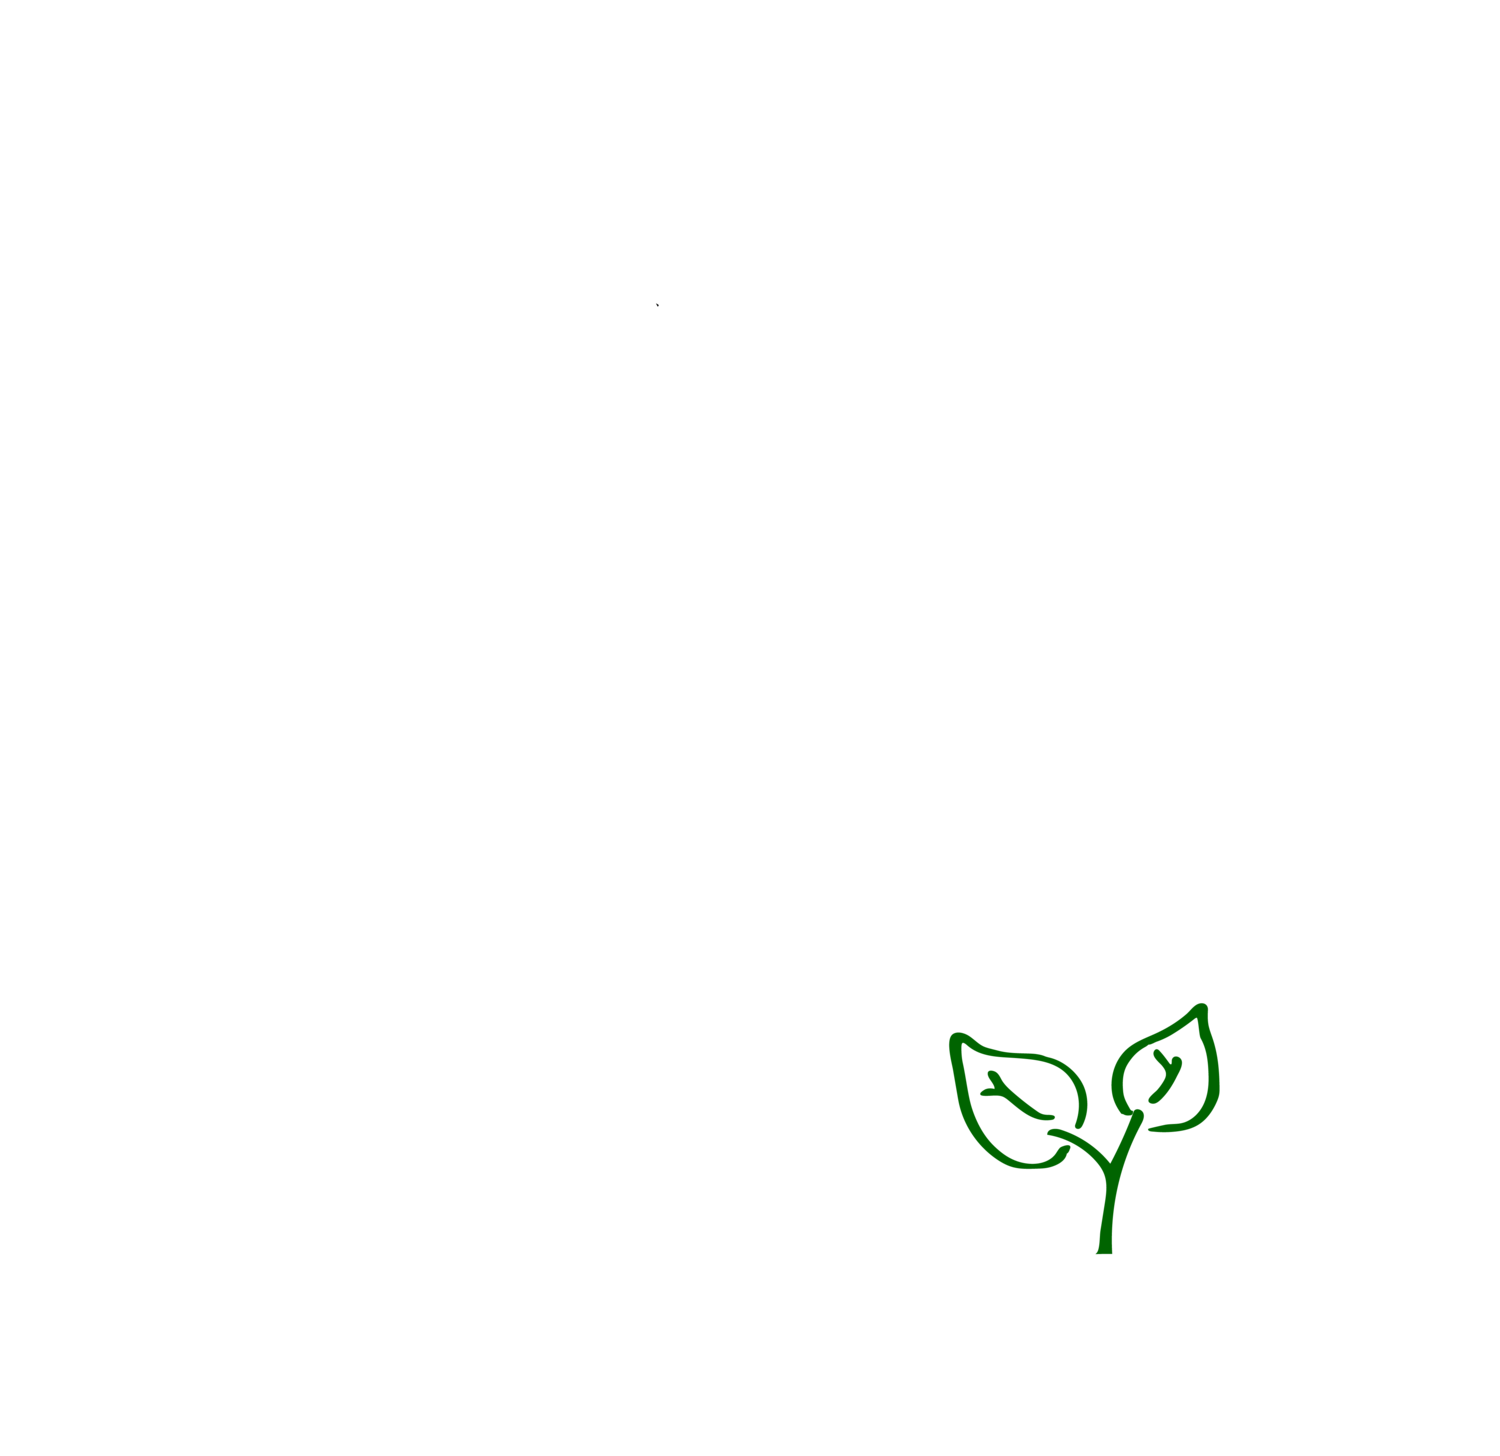 Cornerstone Seed